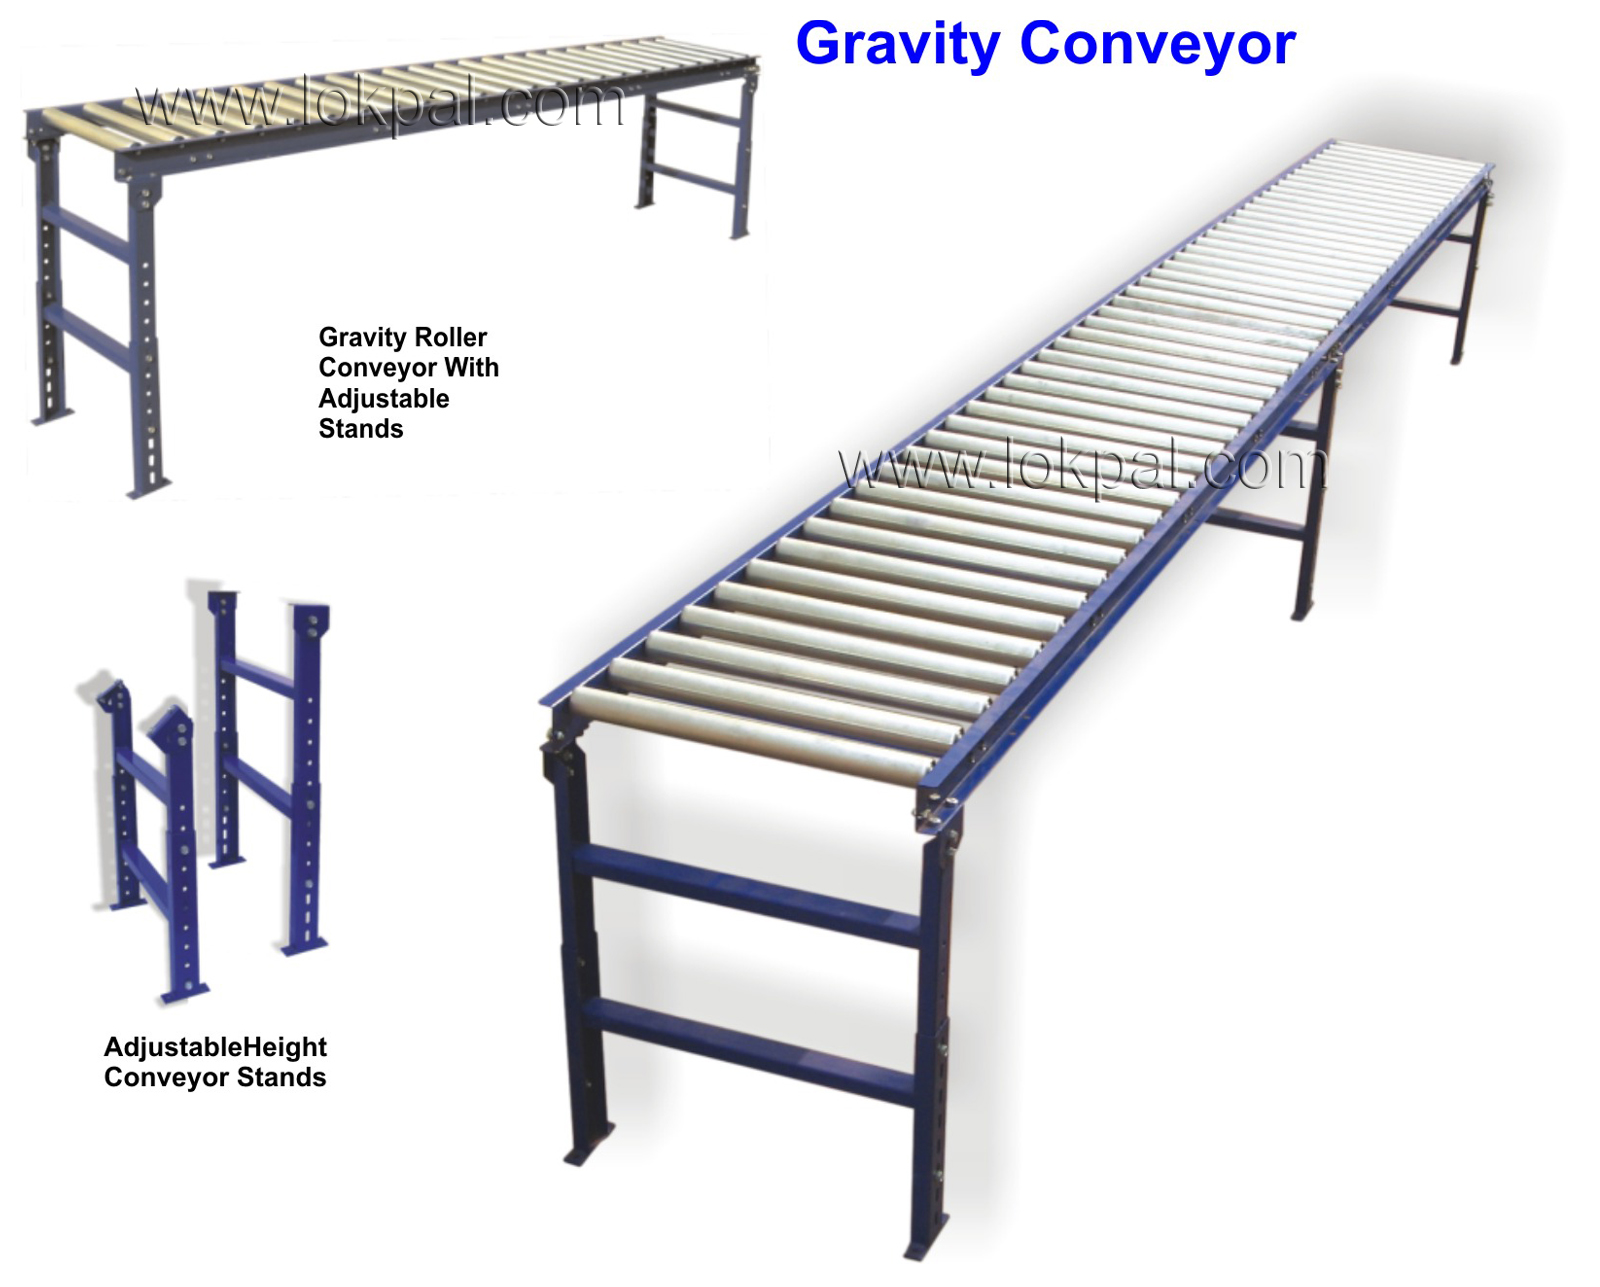 Gravity Conveyors, Gravity Conveyors Wholesalers, Gravity Conveyors, Suppliers, Gravity Conveyors Manufacturers, Gravity Conveyor, Distributor, Wholesaler, Delhi NCR, Noida, India 